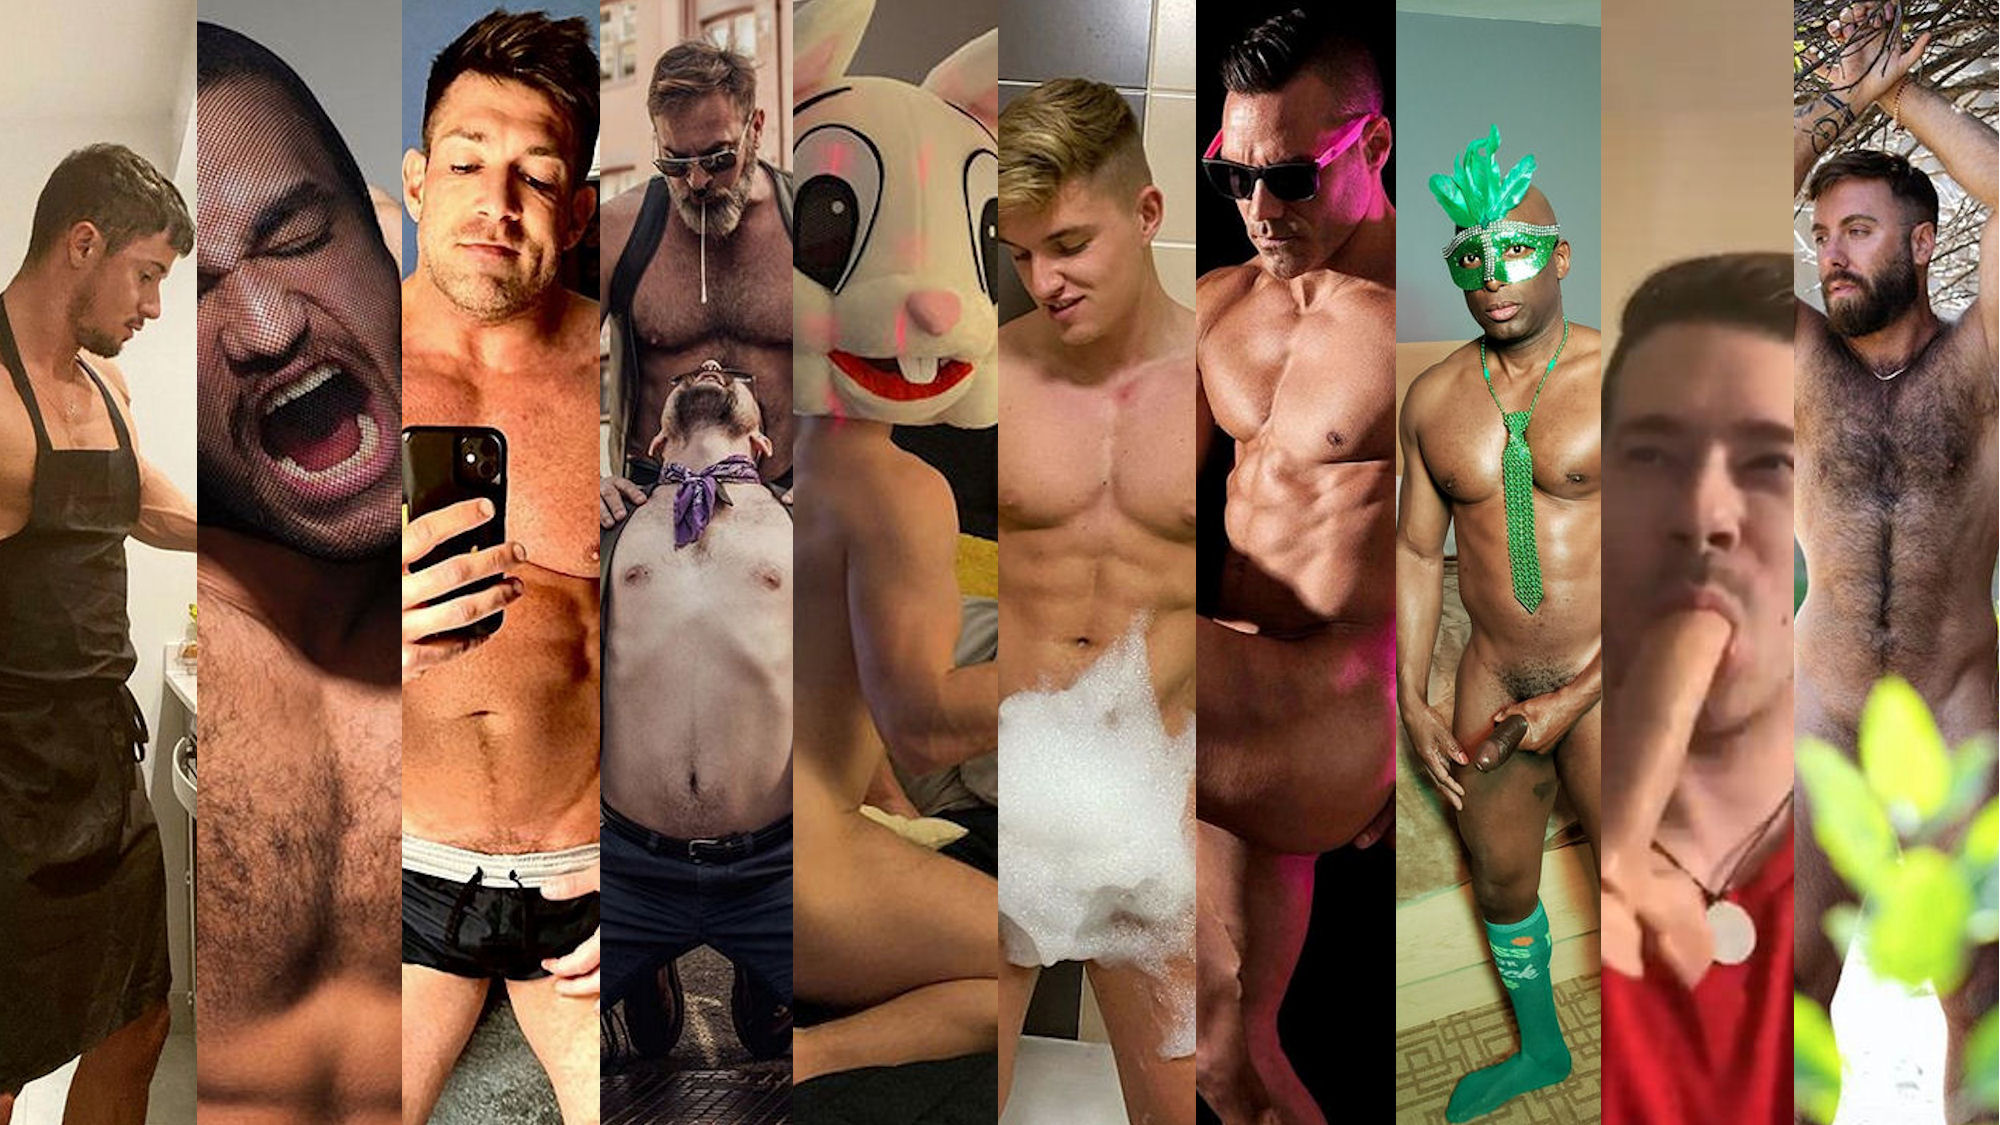 Bad bunny - nude photos. - nude photos bad bunny. 